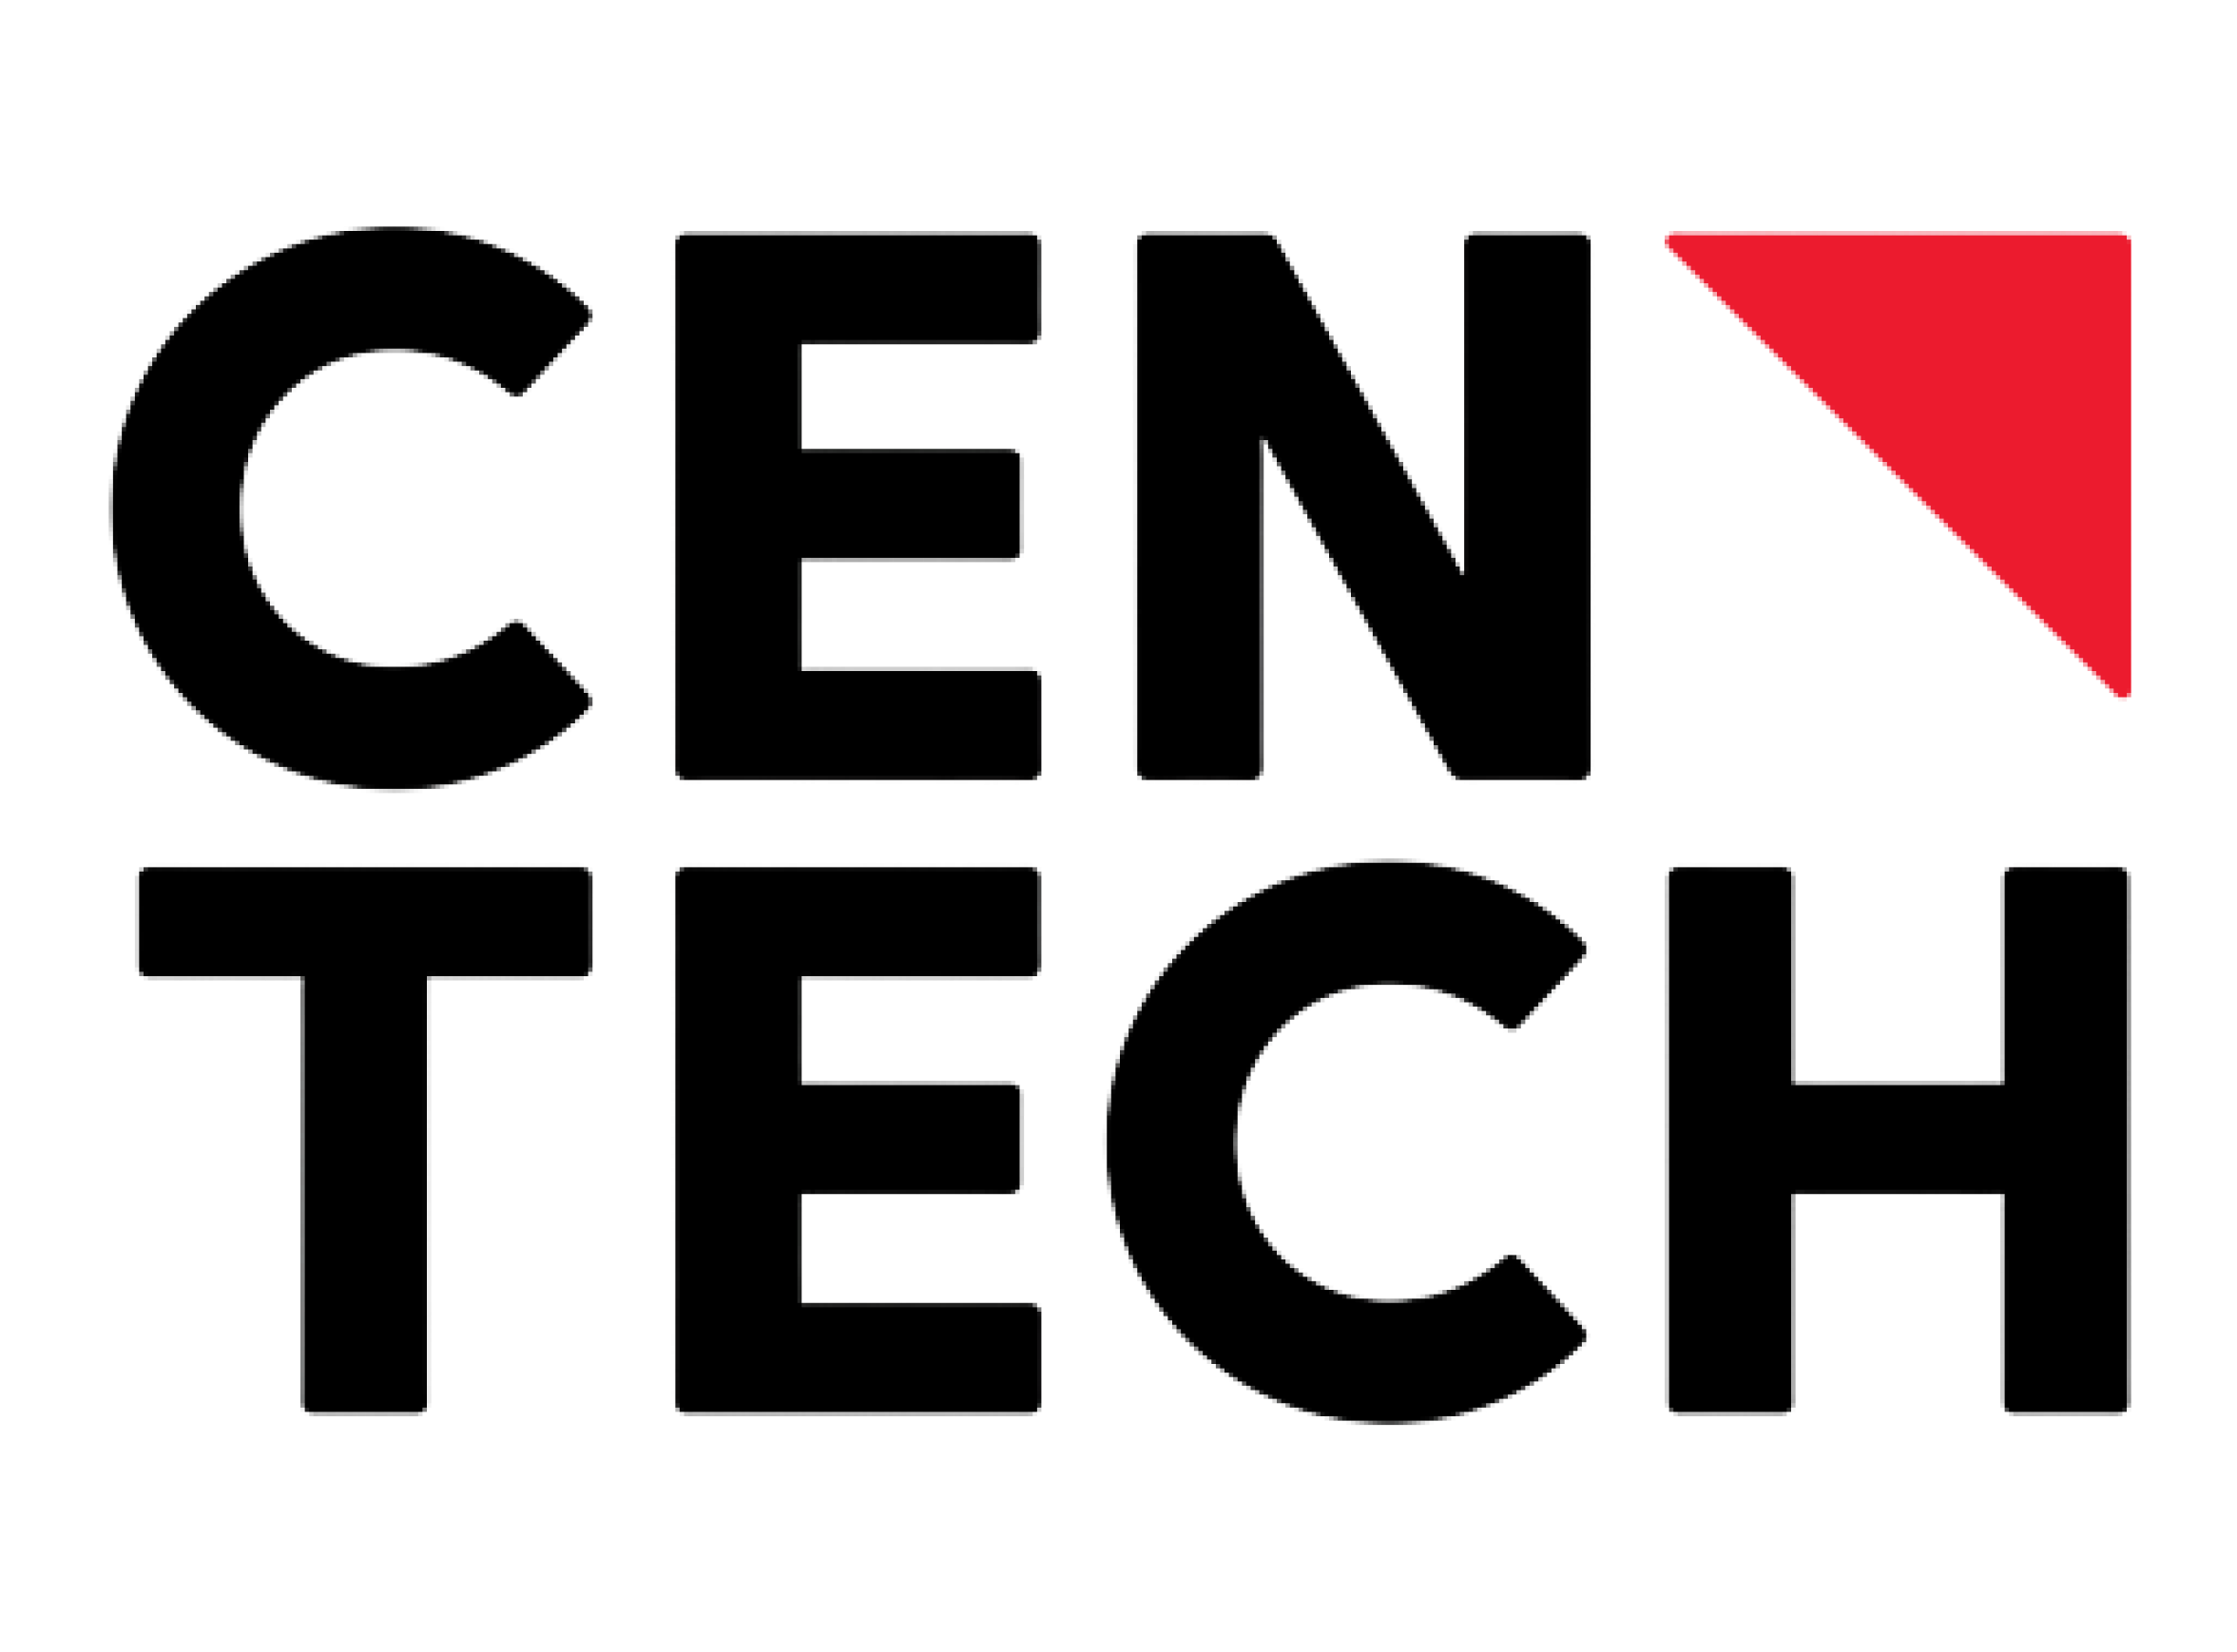 centech logo